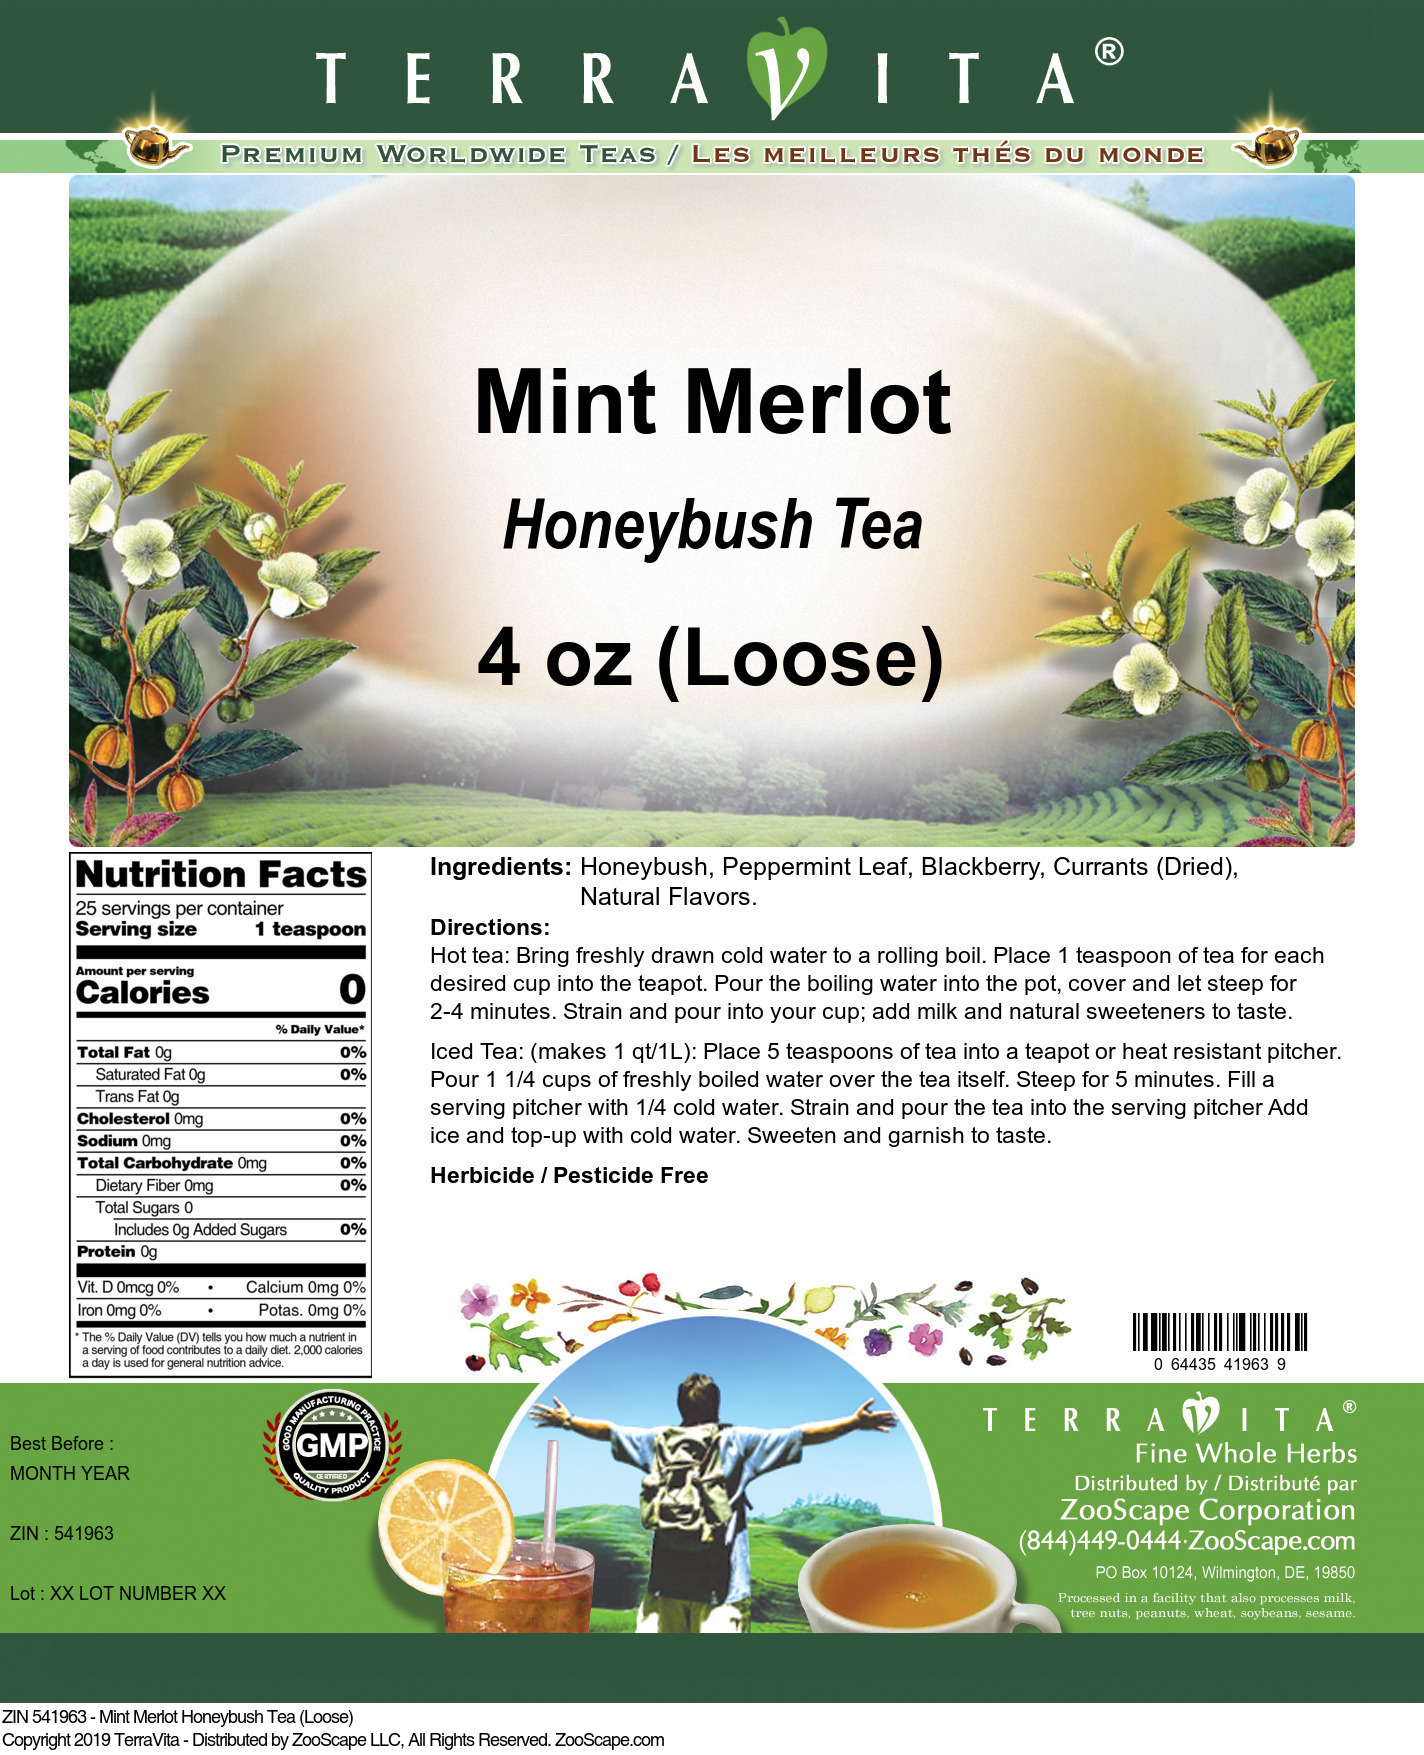 Mint Merlot Honeybush Tea (Loose) - Label